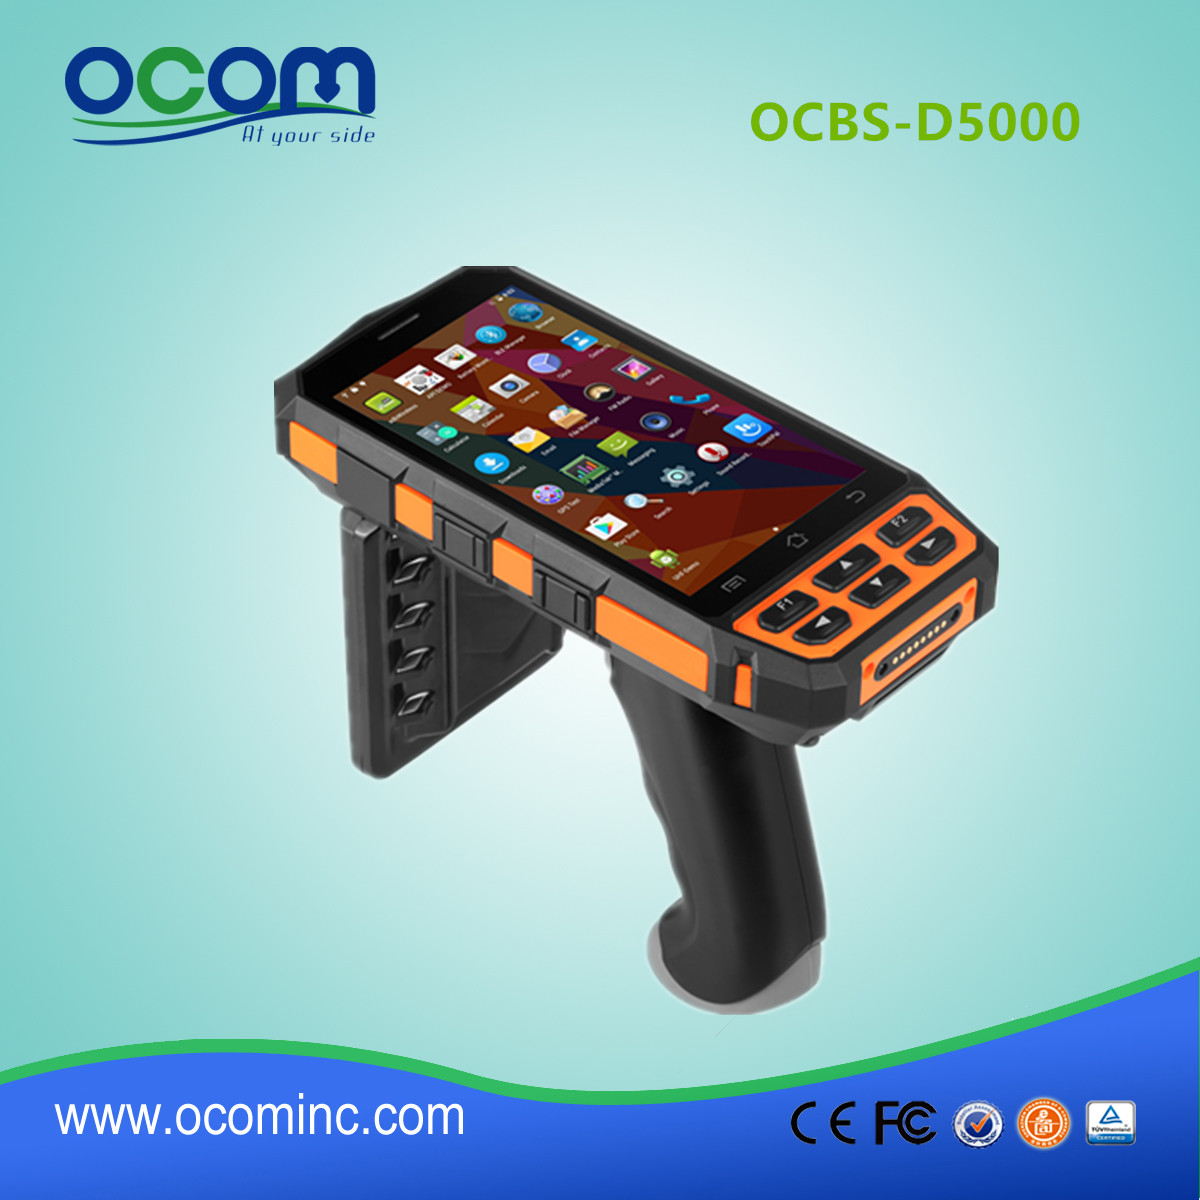 OCBS-D5000 Android 5.0 "4G Handheld-Datenendgerät PDA mit optionalem UHF